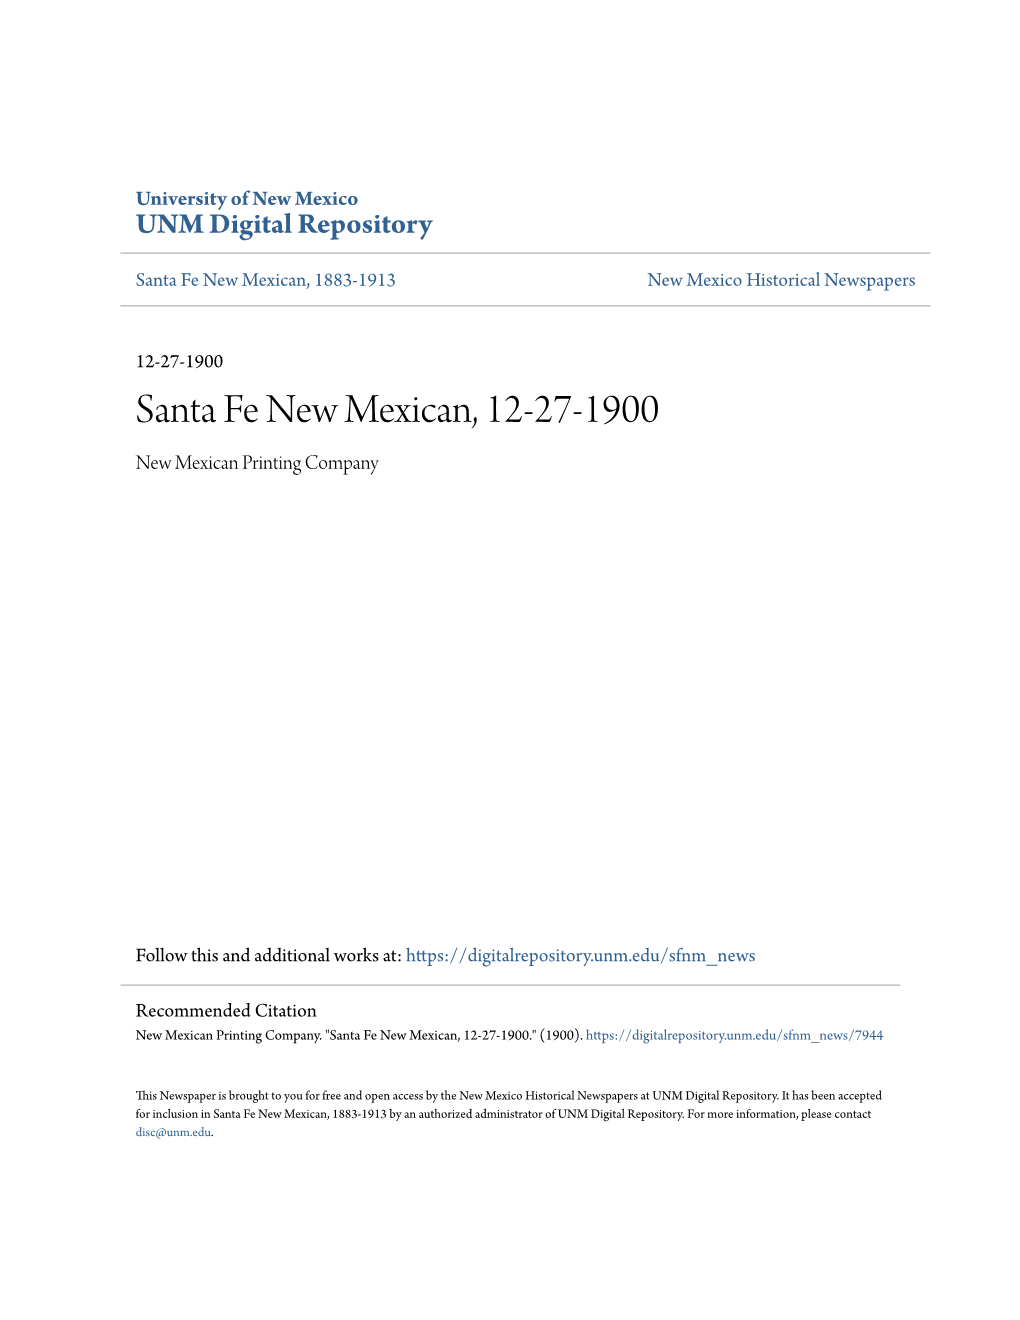 Santa Fe New Mexican, 12-27-1900 New Mexican Printing Company